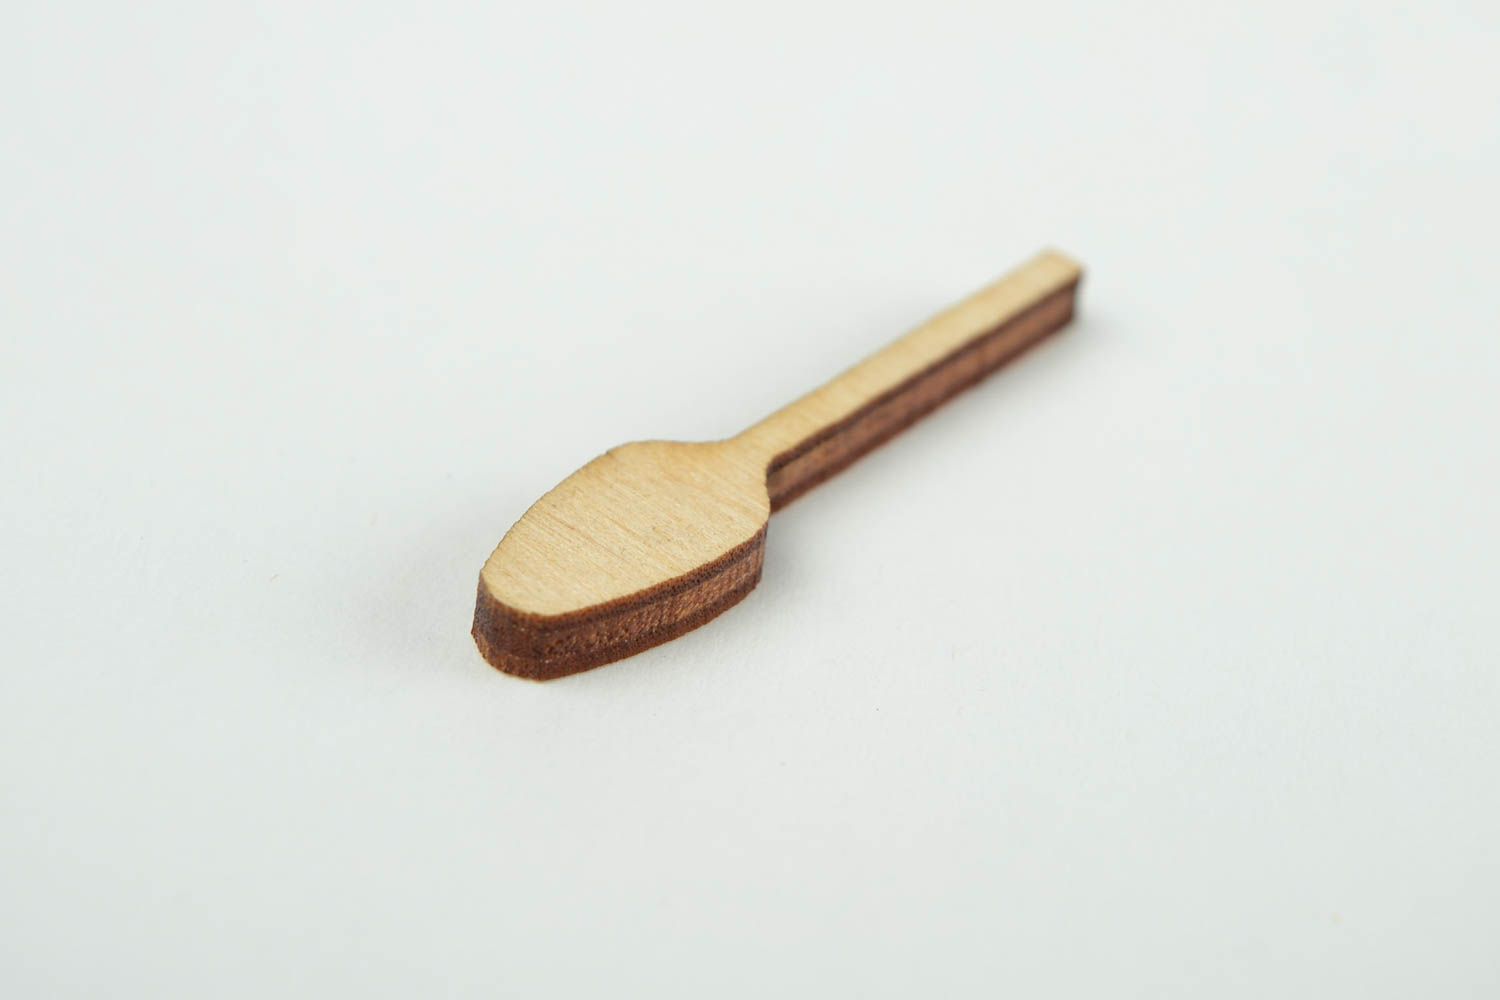 Unusual handmade wooden blank wood craft creative work ideas small gifts photo 4